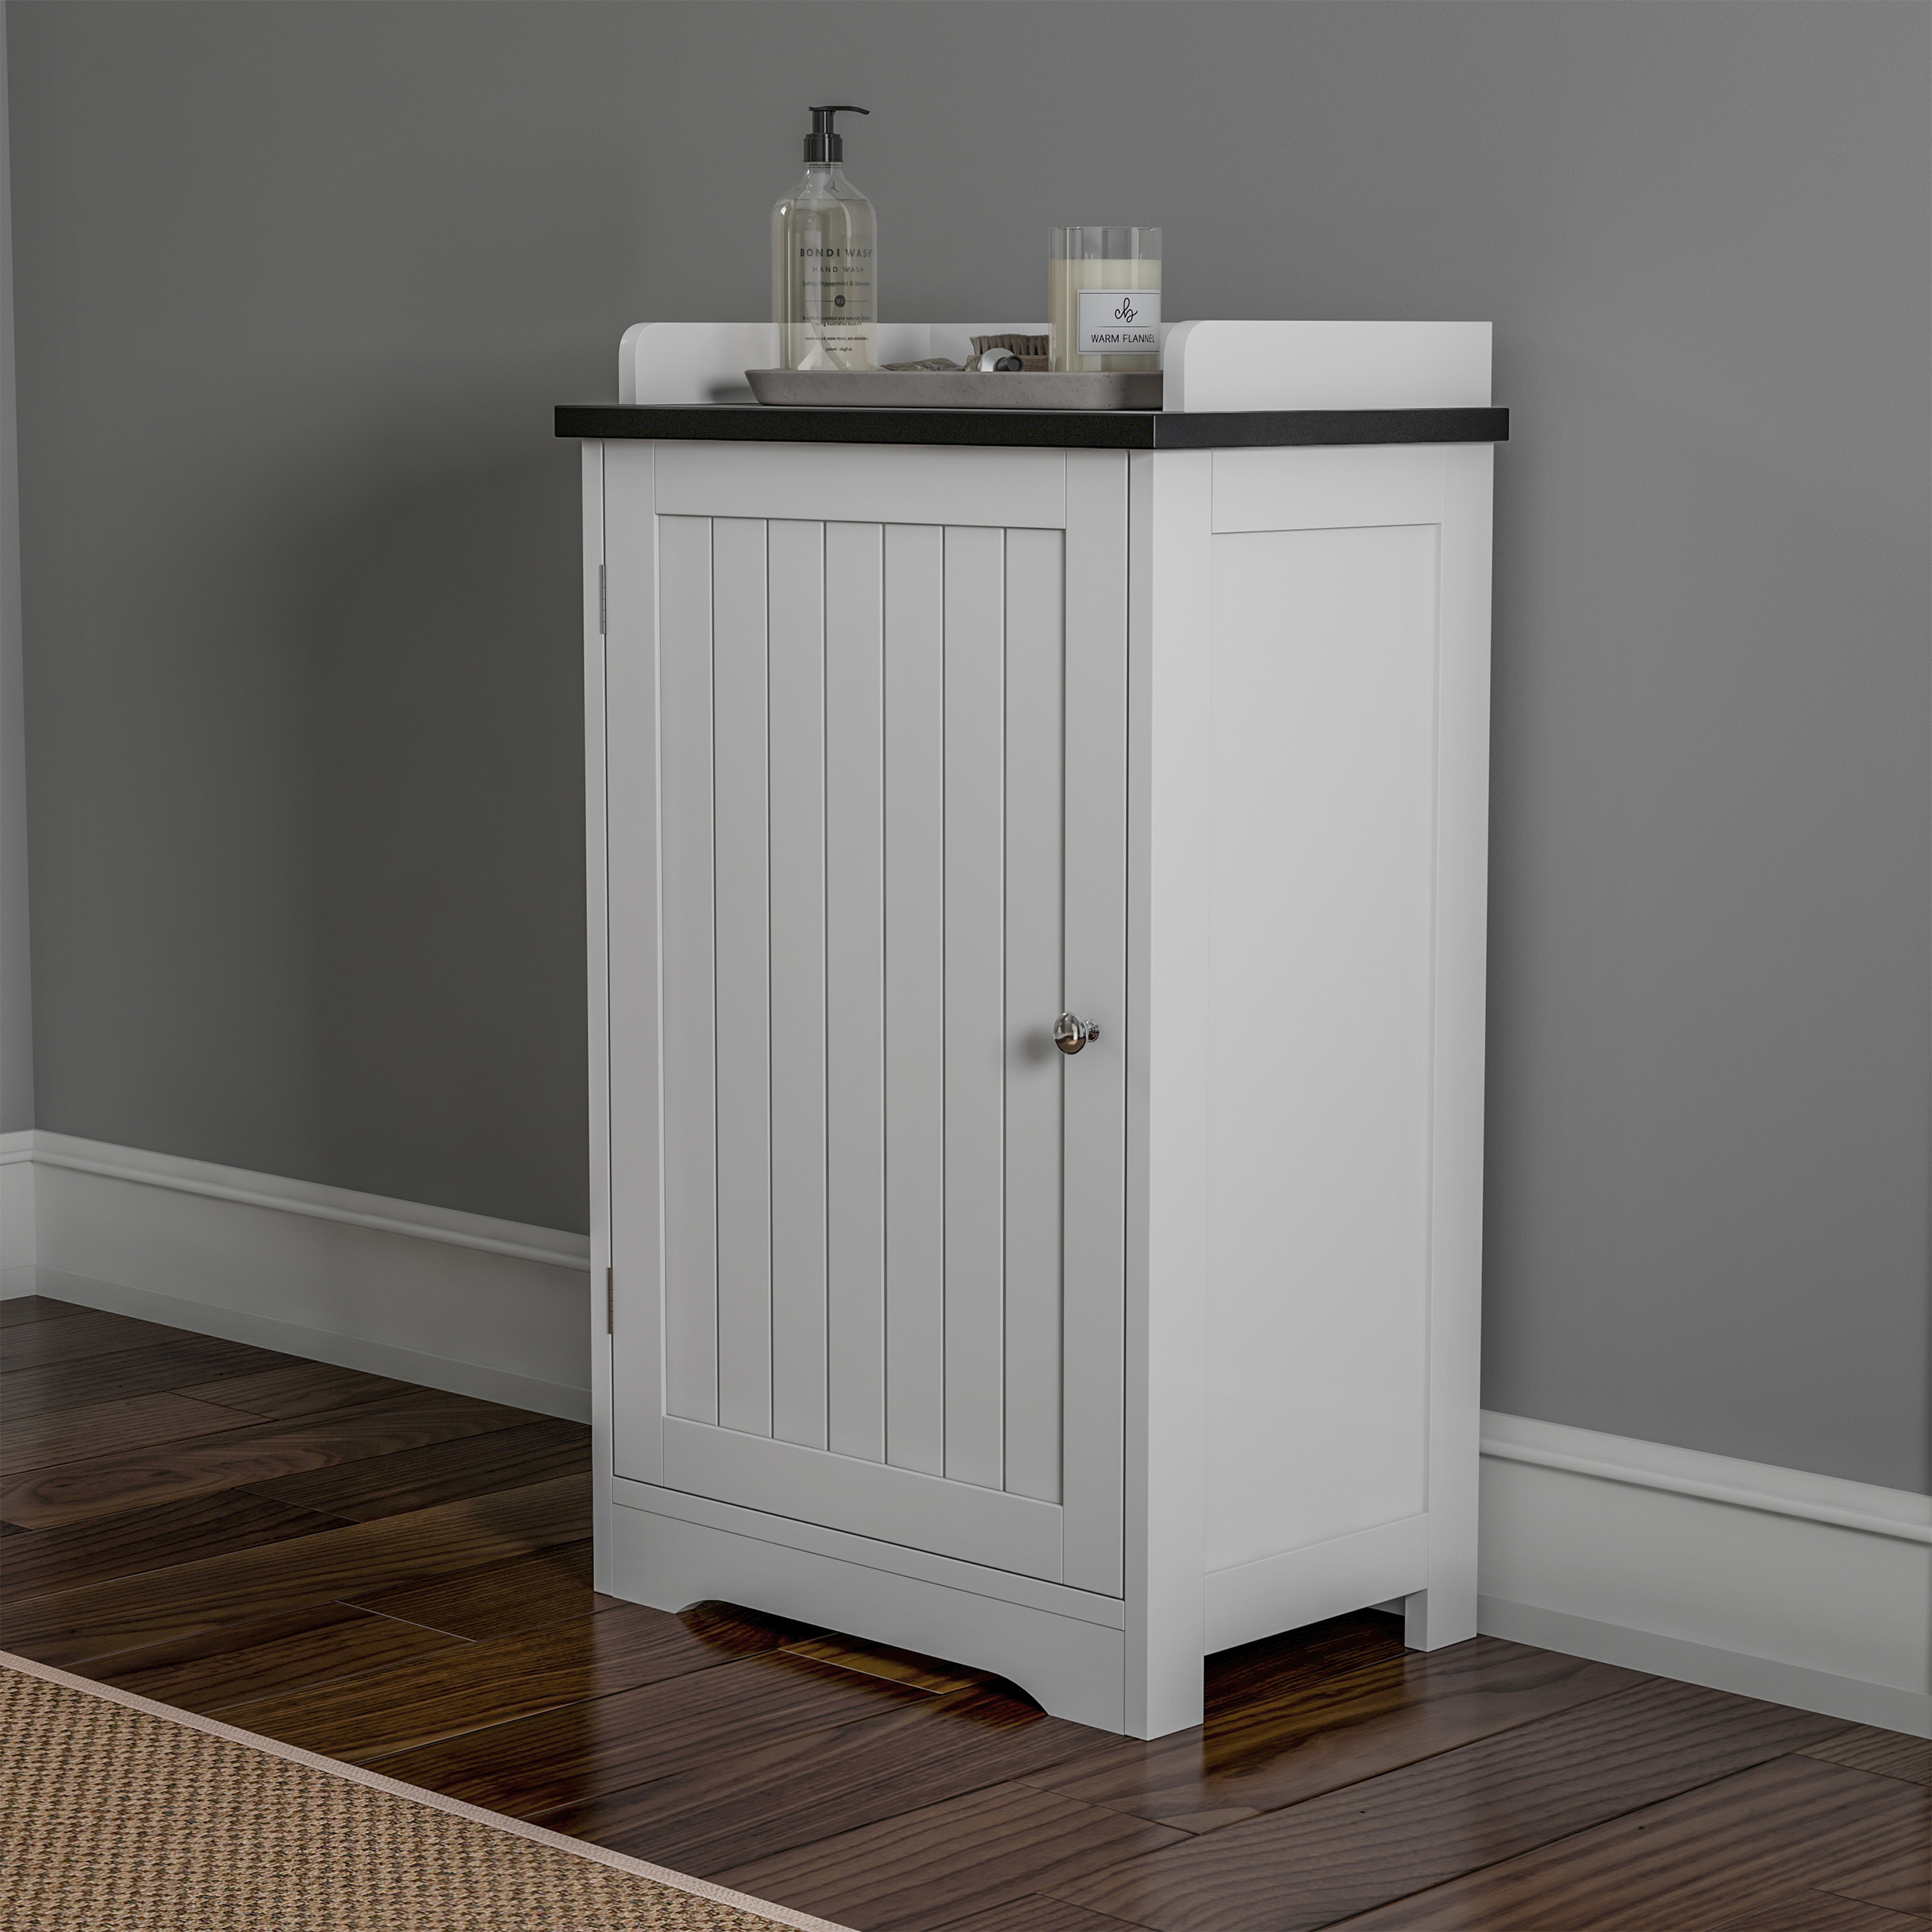 Bathroom Floor Cabinet Free Standing White Storage Cupboard For Bath Towels Or Laundry Room Adjustable Shelf & Slatted Look